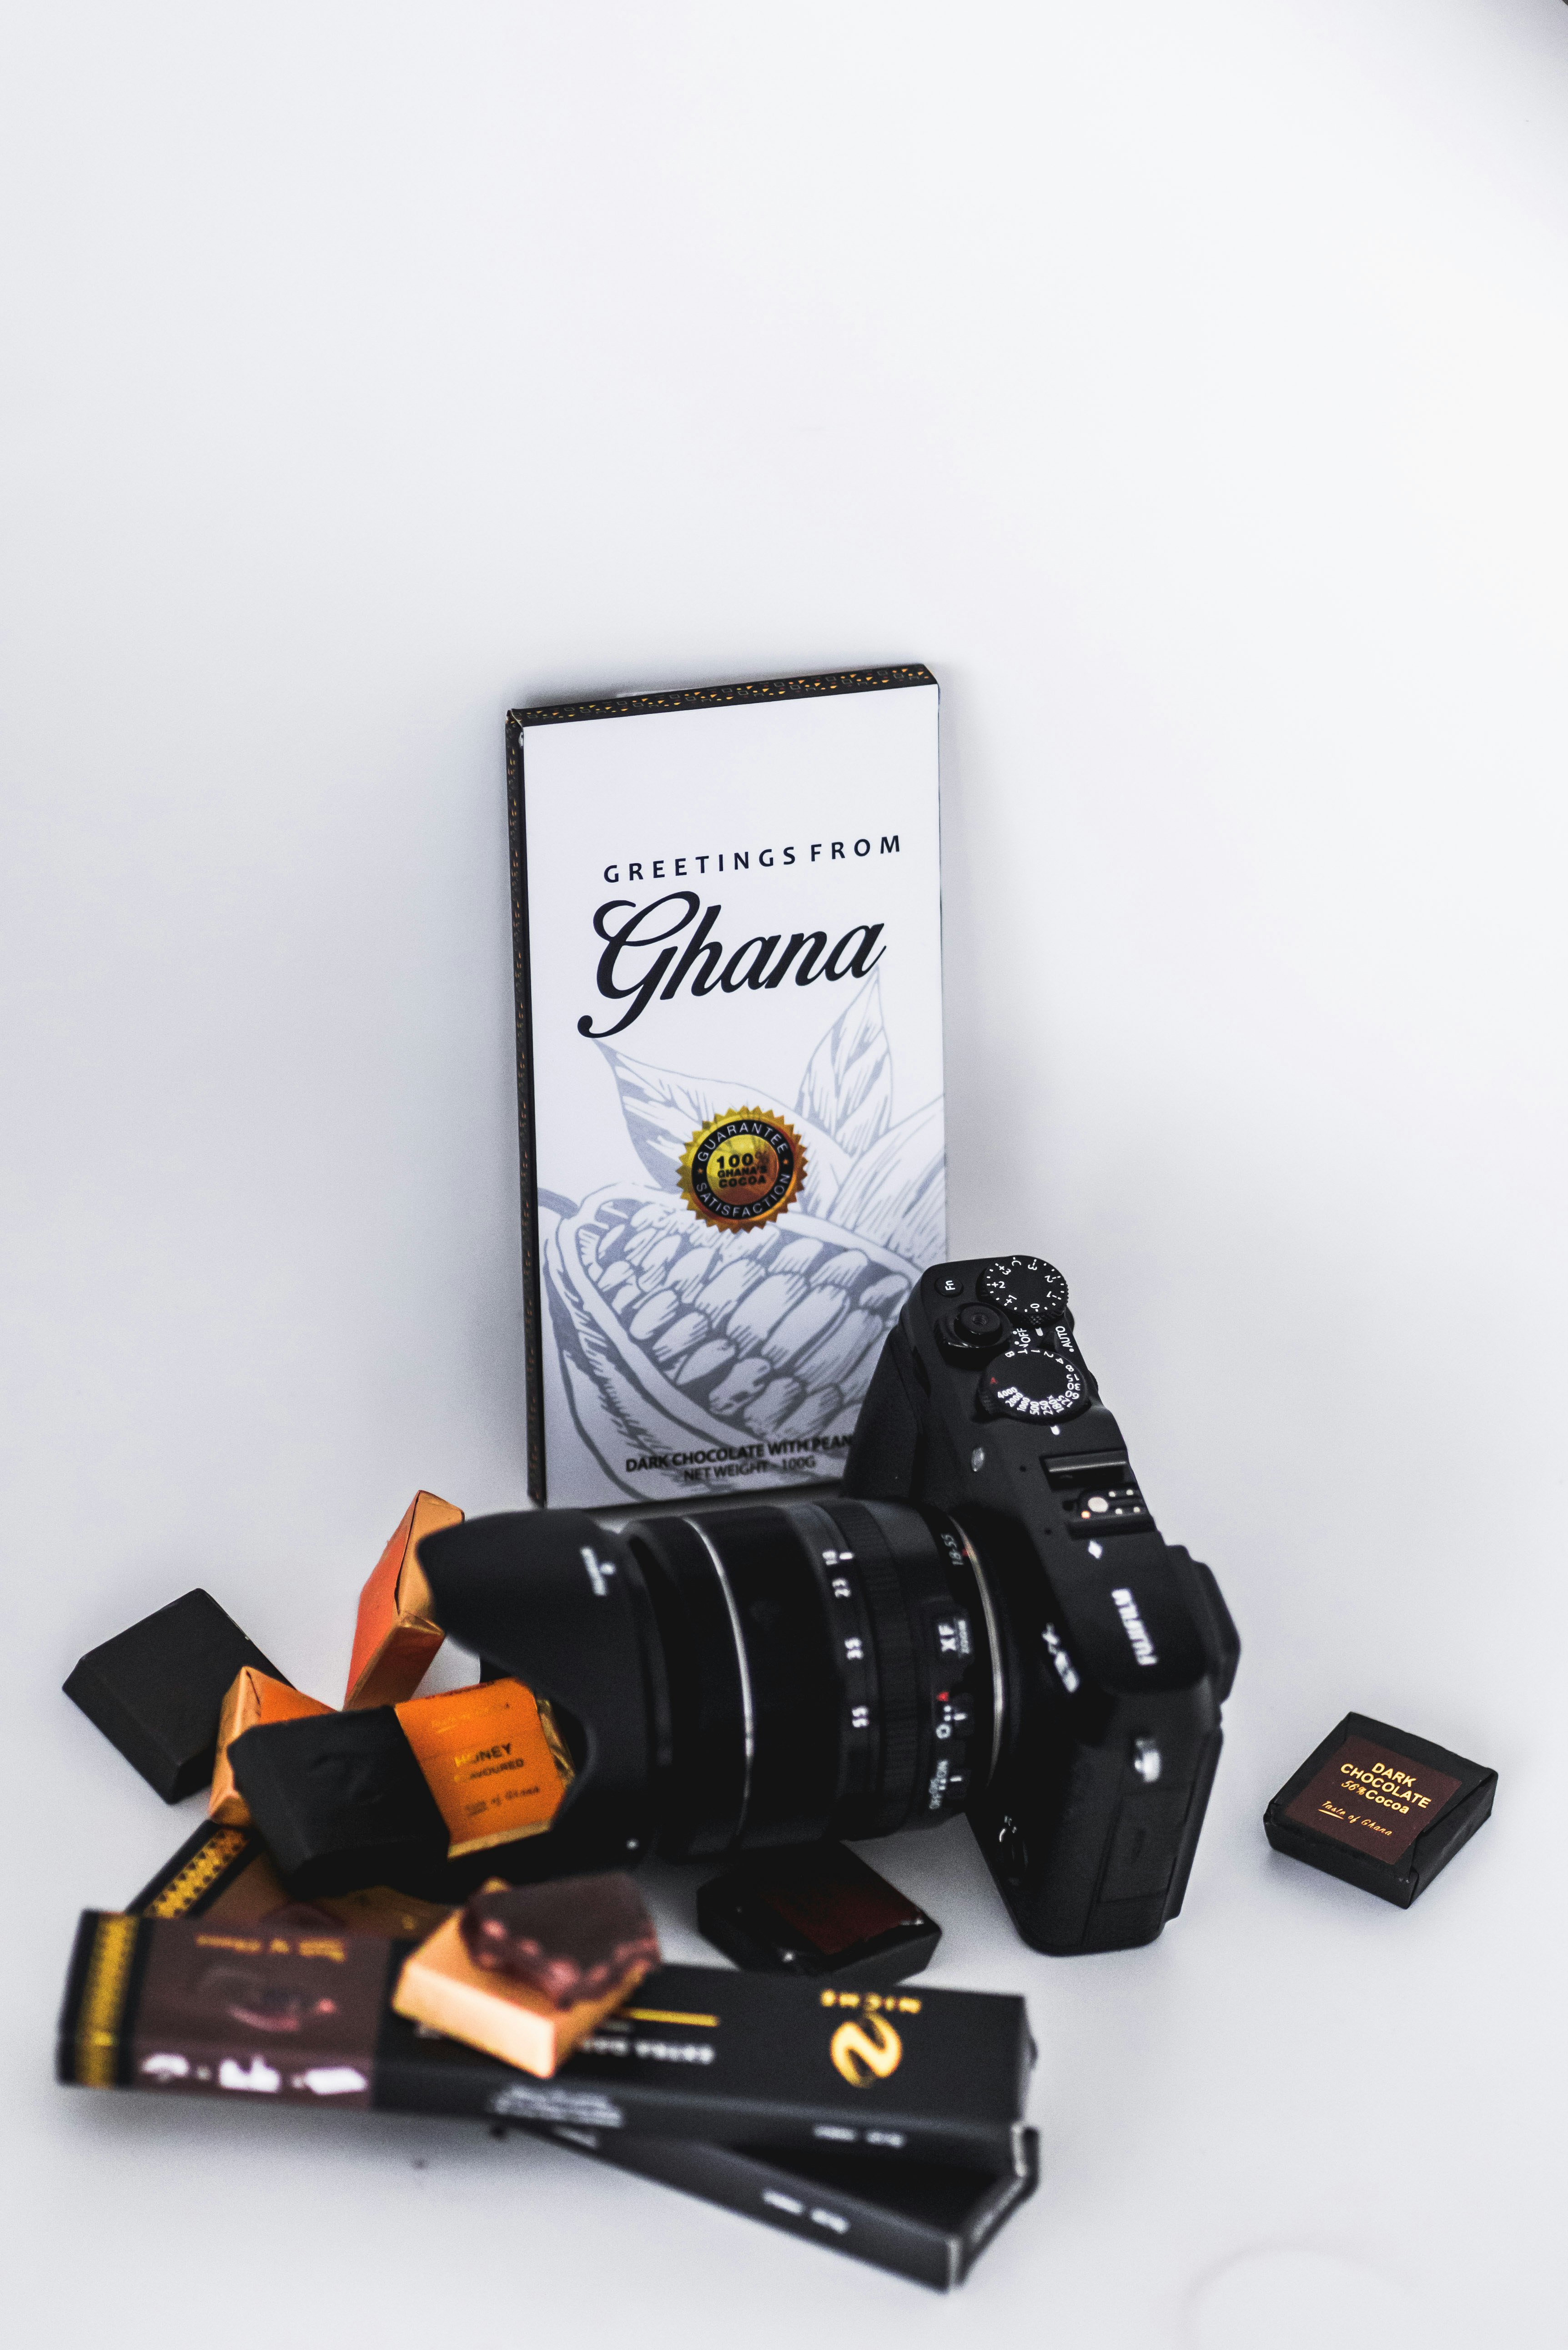 black DSLR camera near chocolate packets